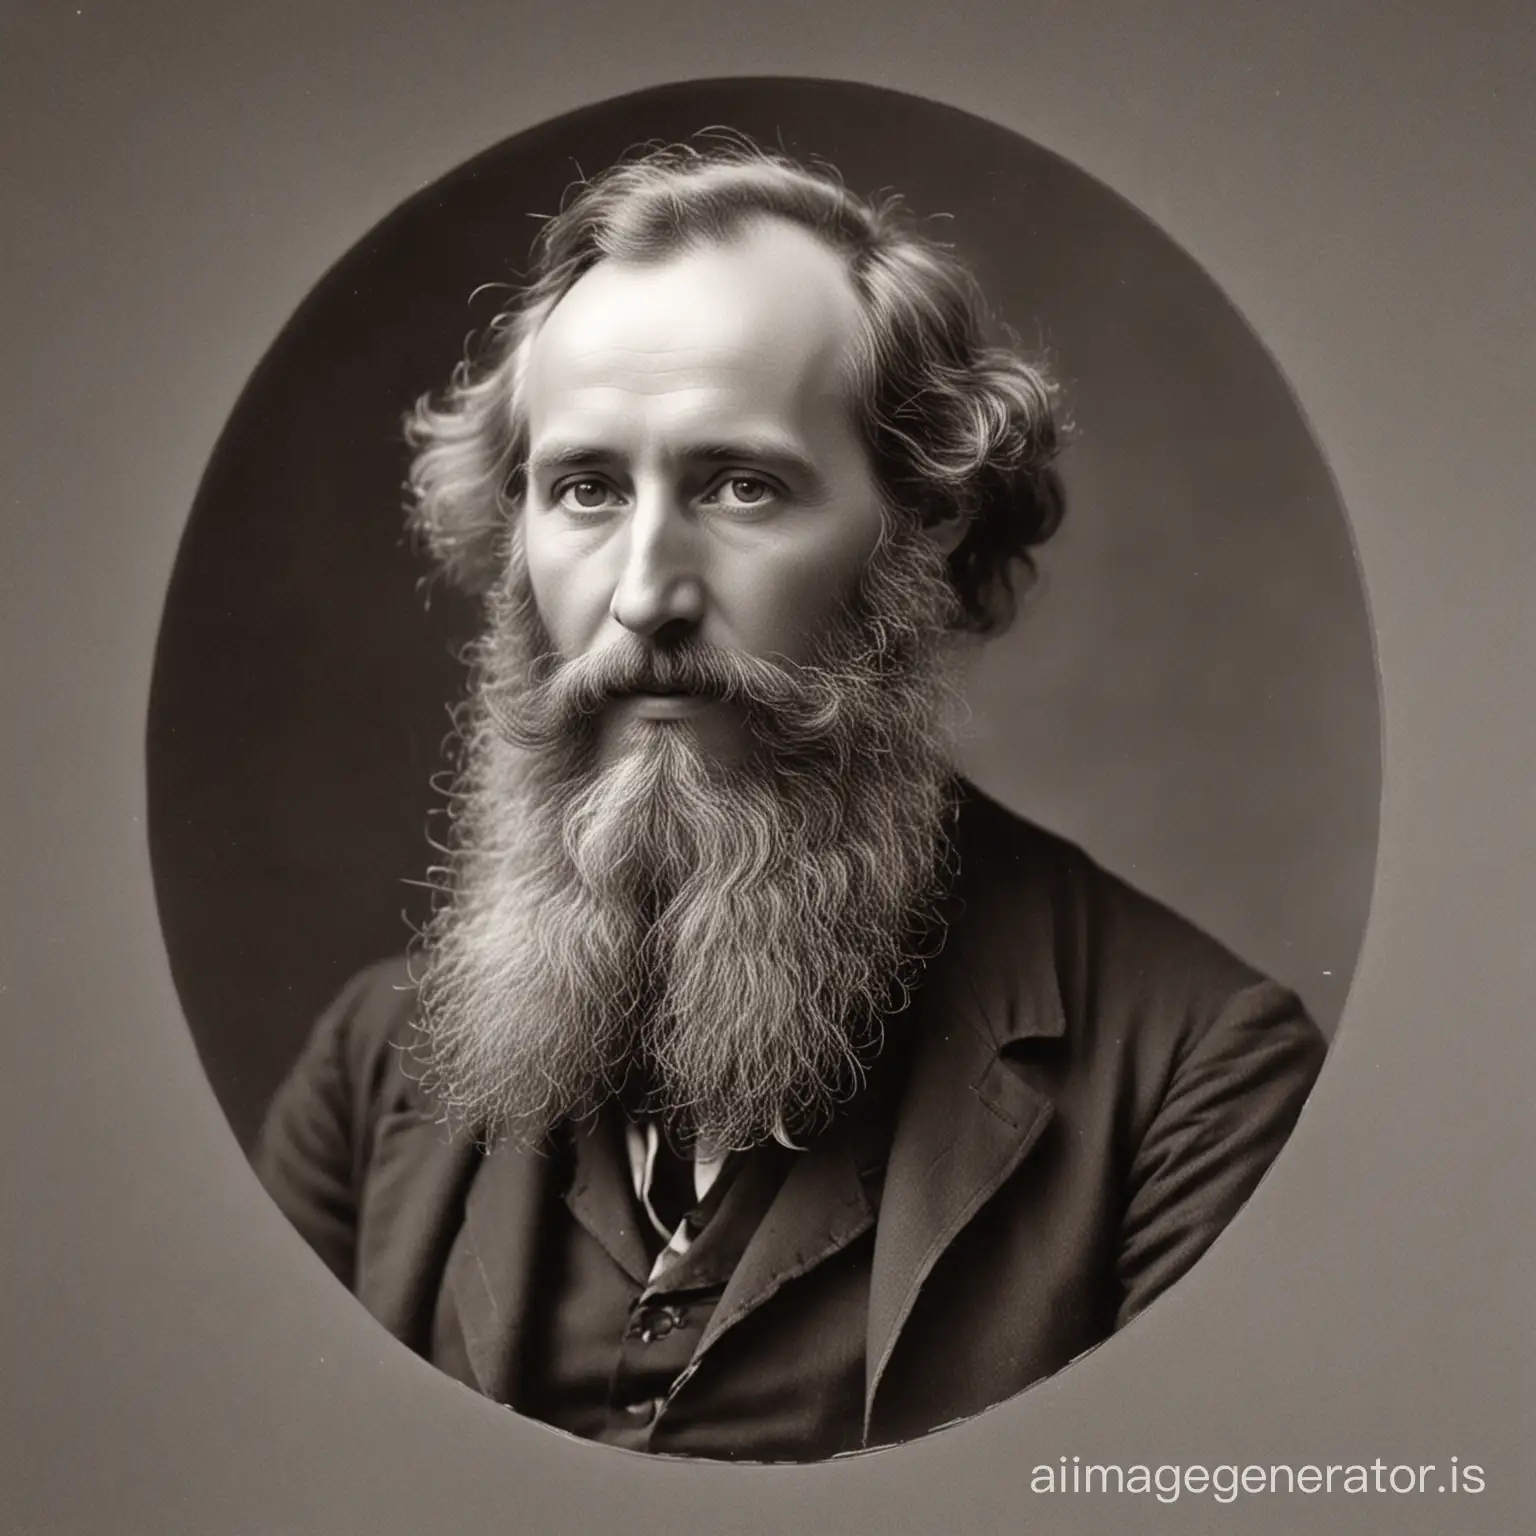 James-Clerk-Maxwell-Portrait-in-Monochrome-Sketch-Style